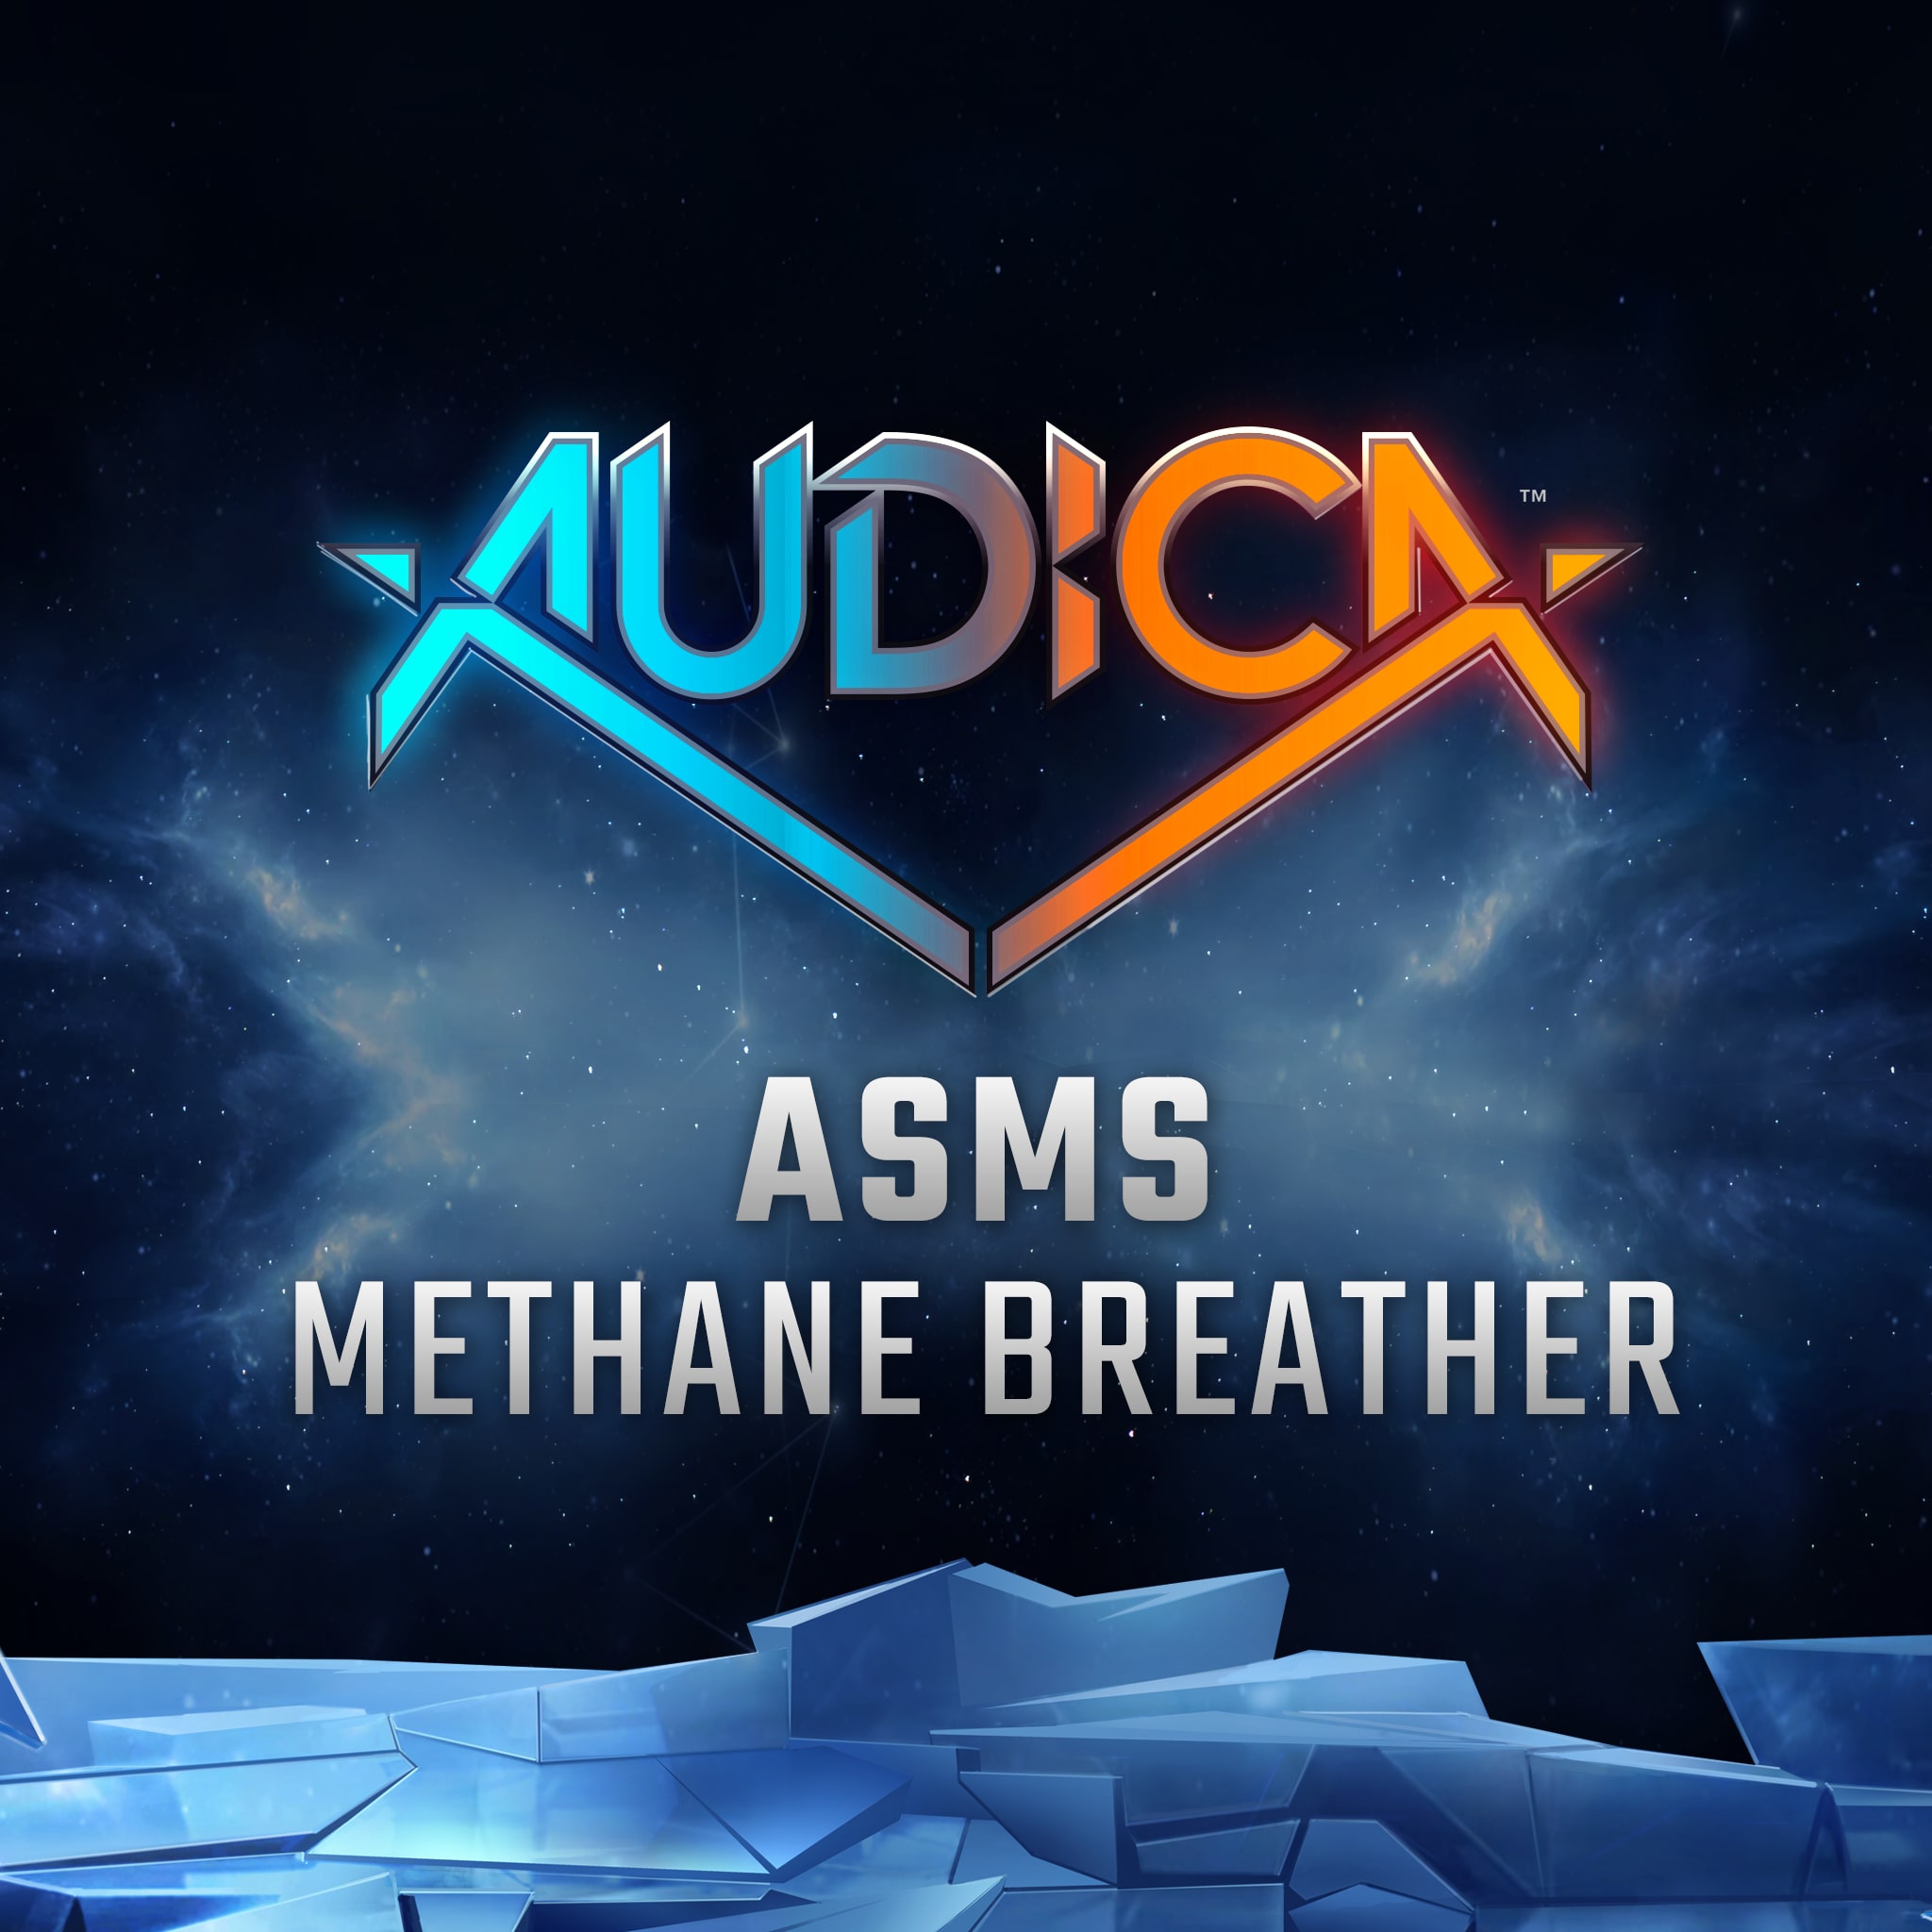 'Methane Breather' - asms